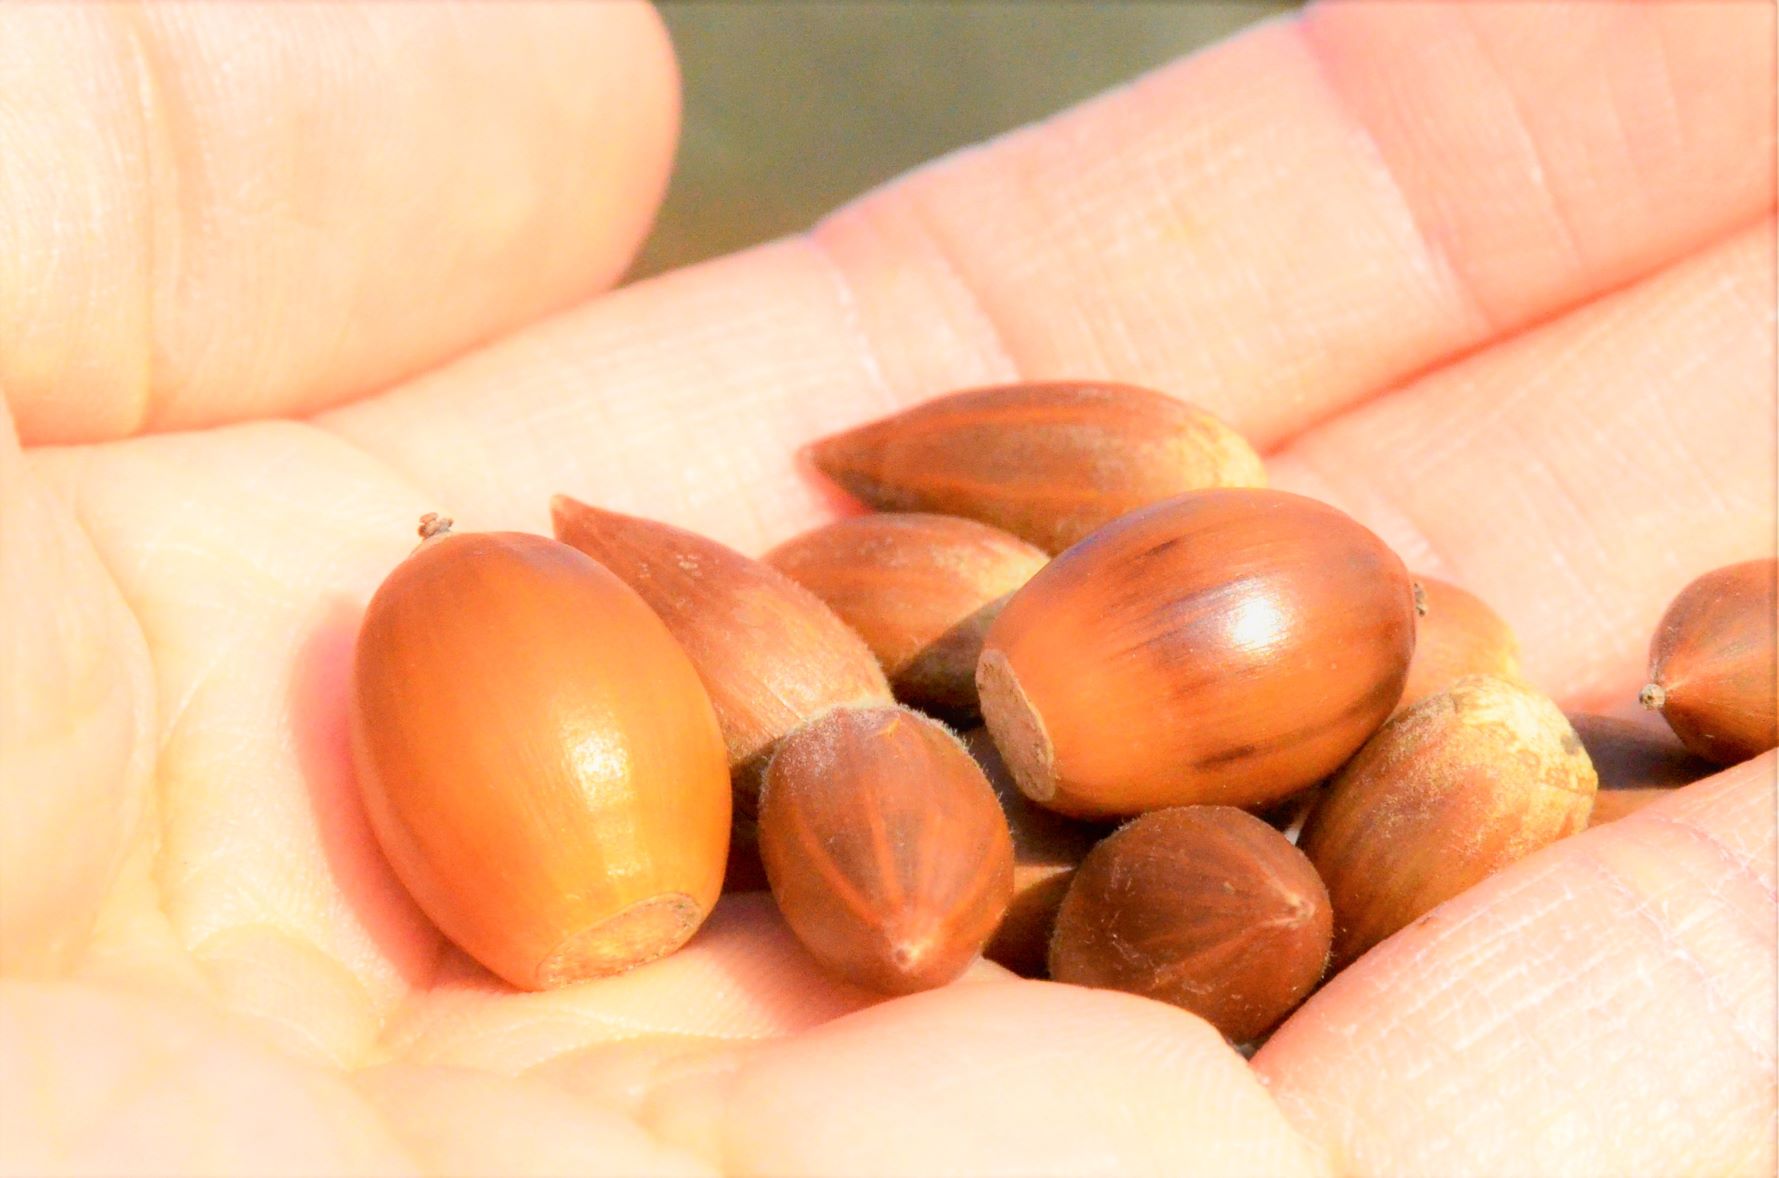 Picking up acorns